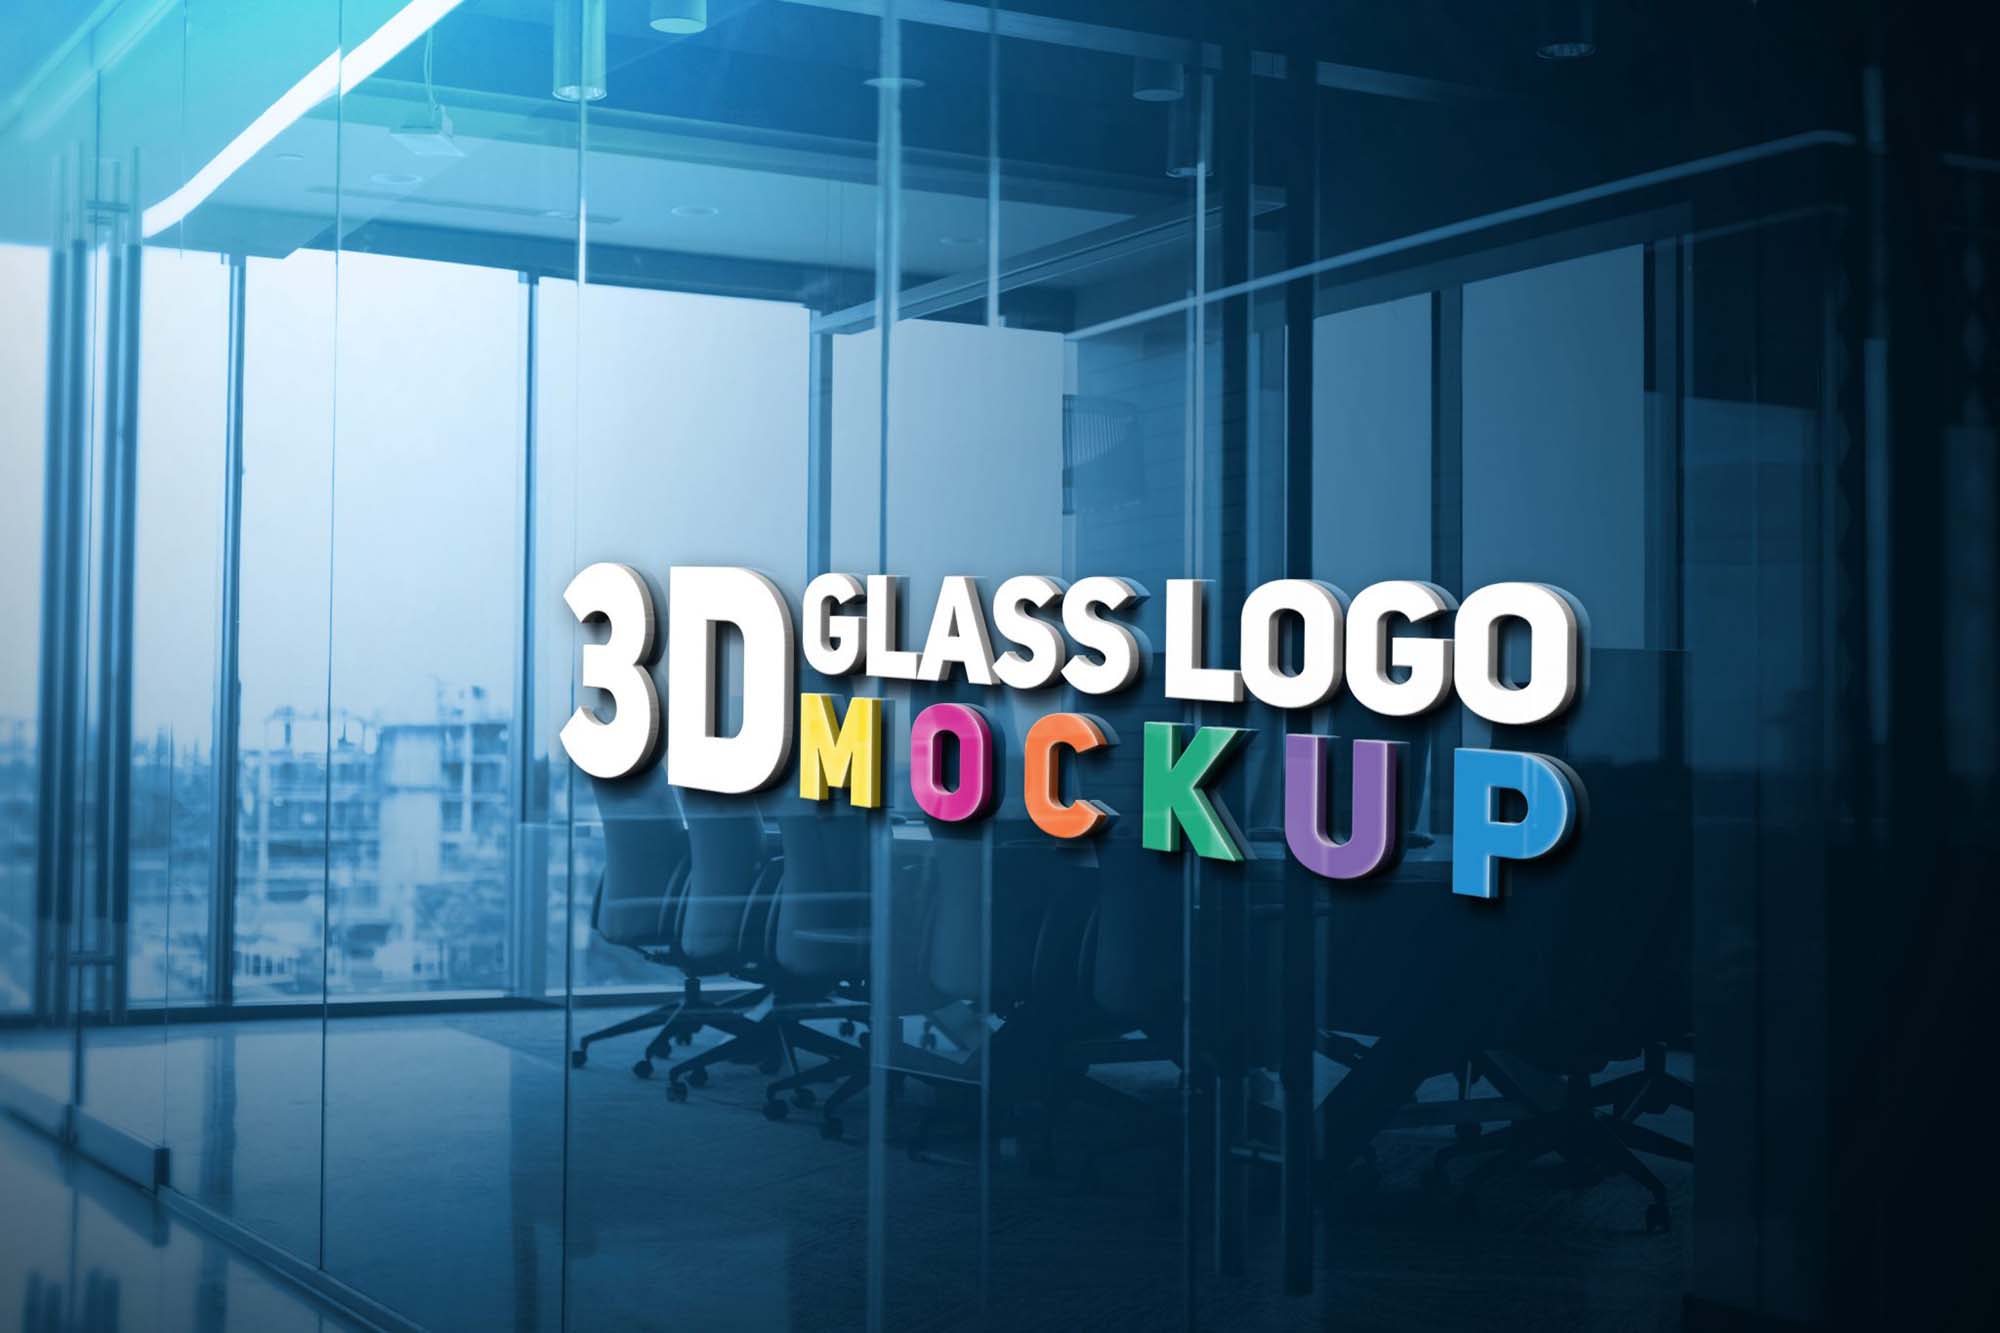 3d office glass logo mockup